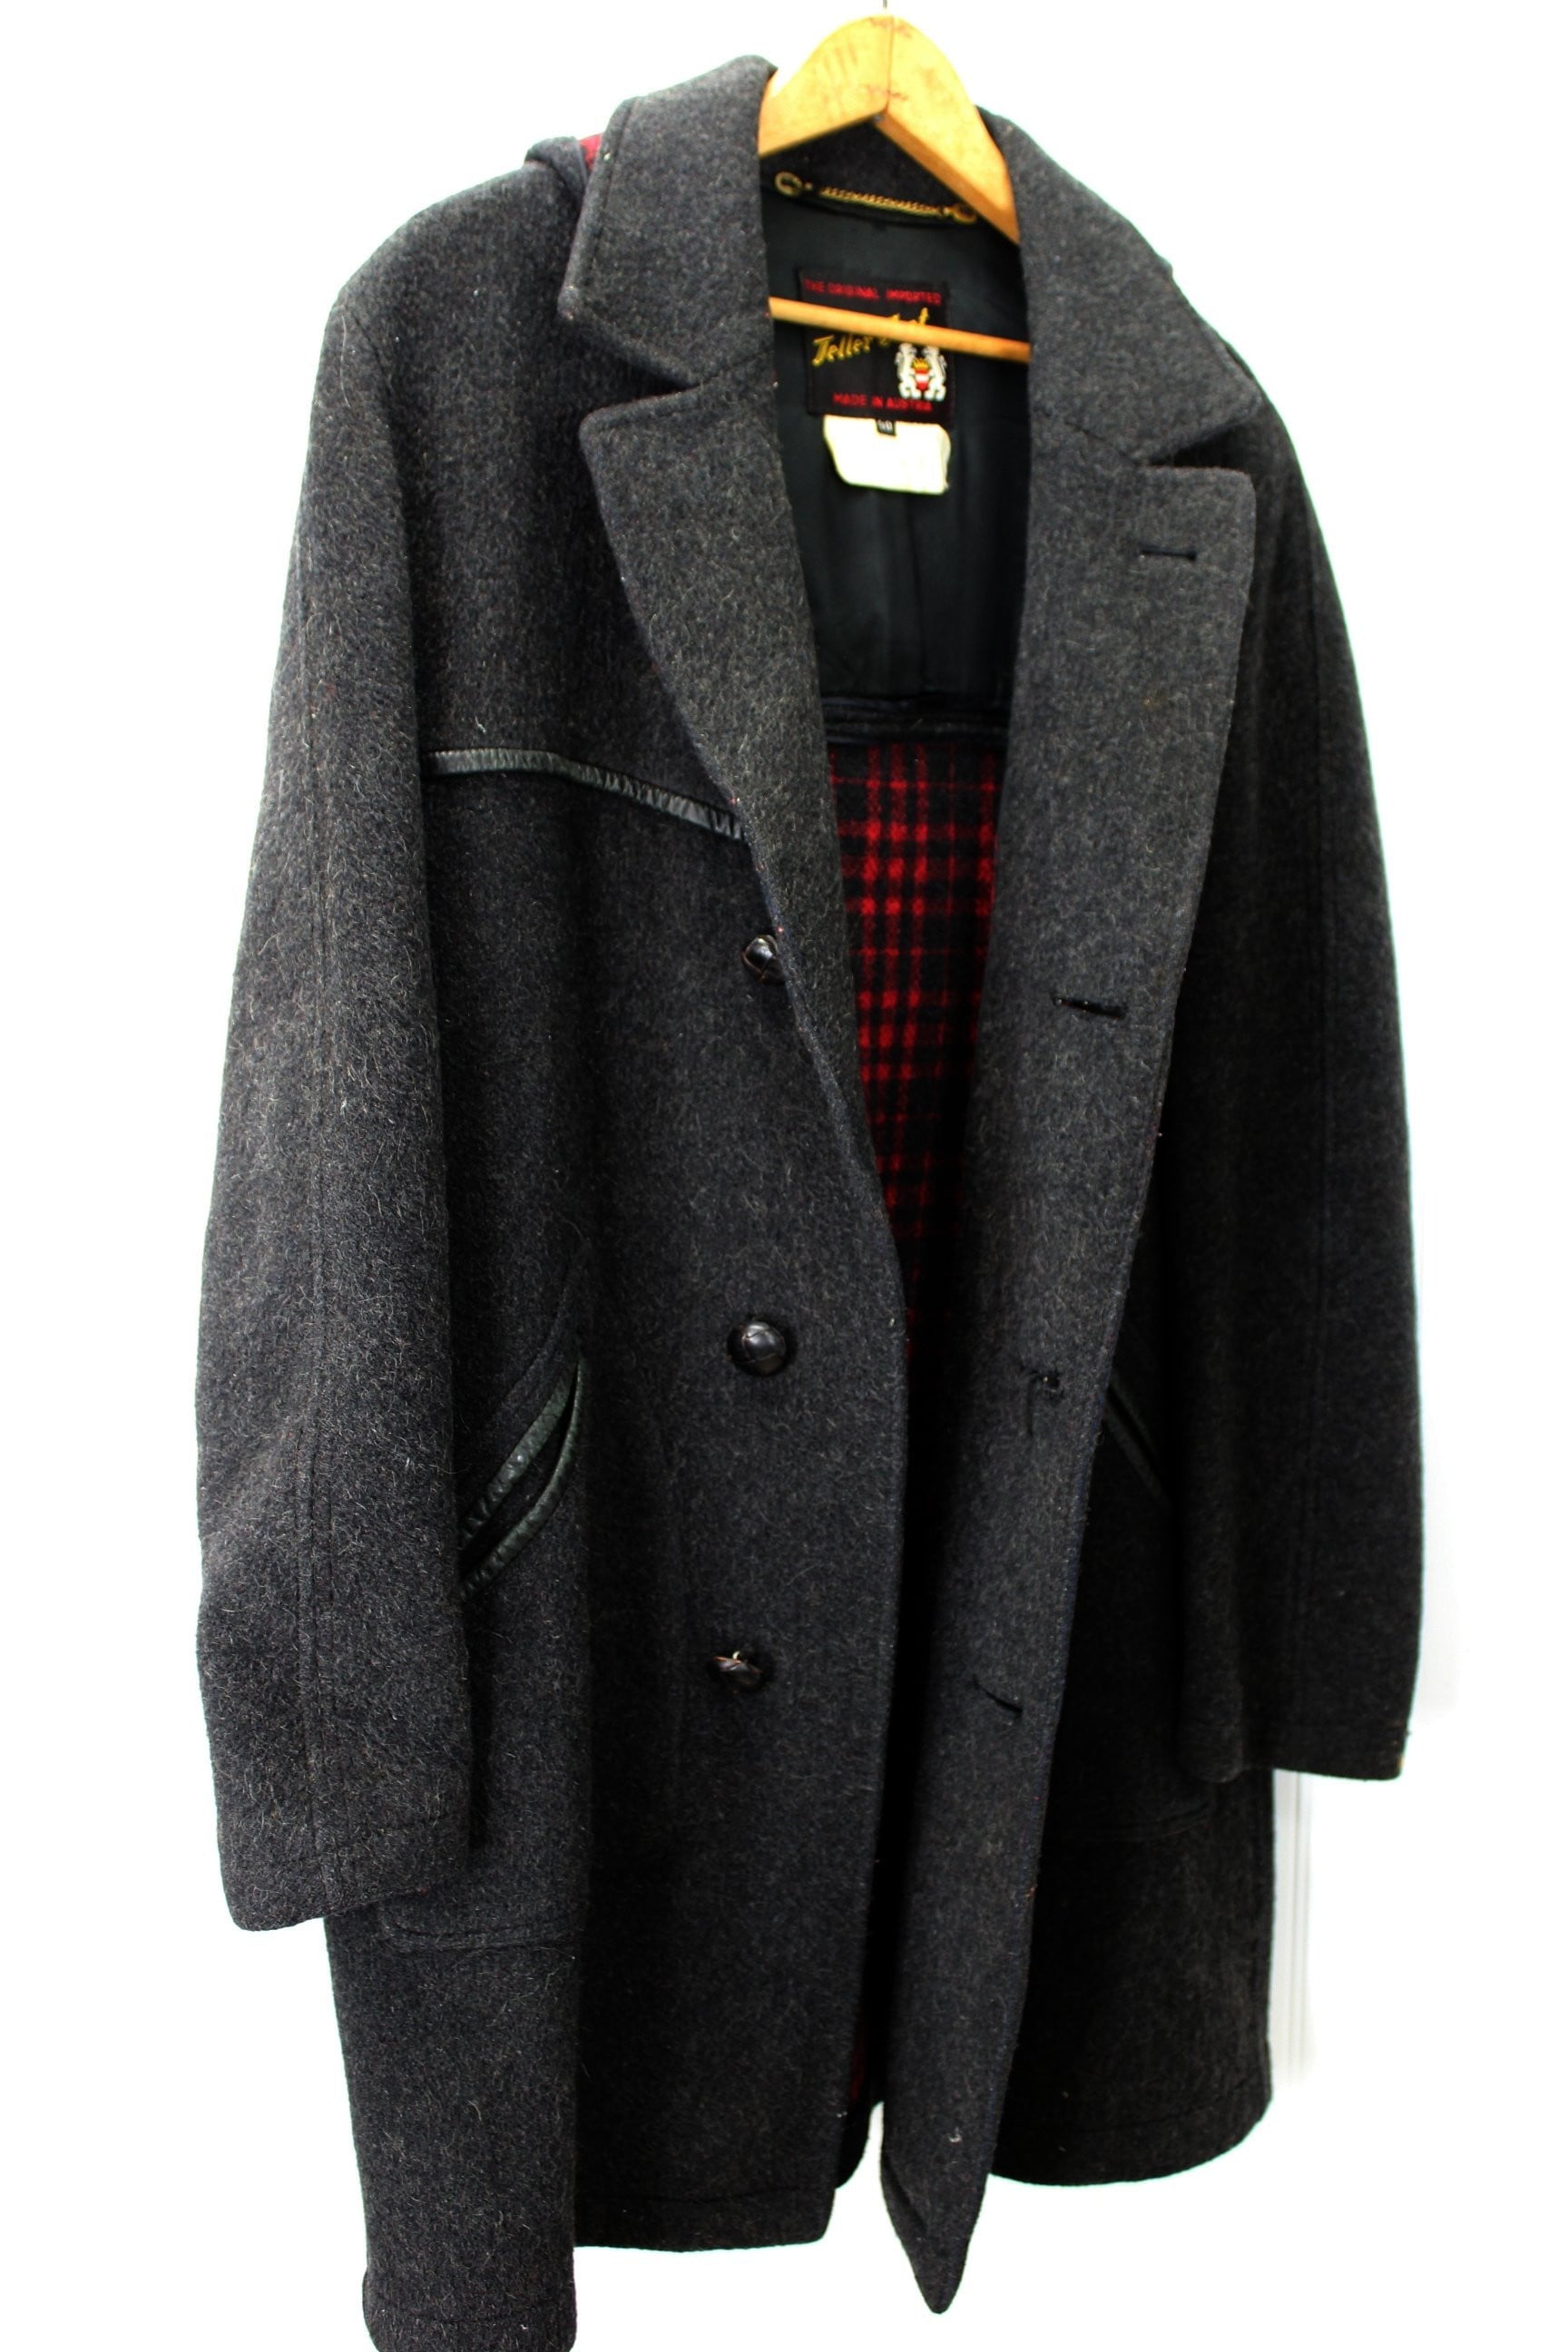 Teller Coat Austria Vintage 1960s Wool Car Coat - Fully Lined - Hood Buttons dense warm